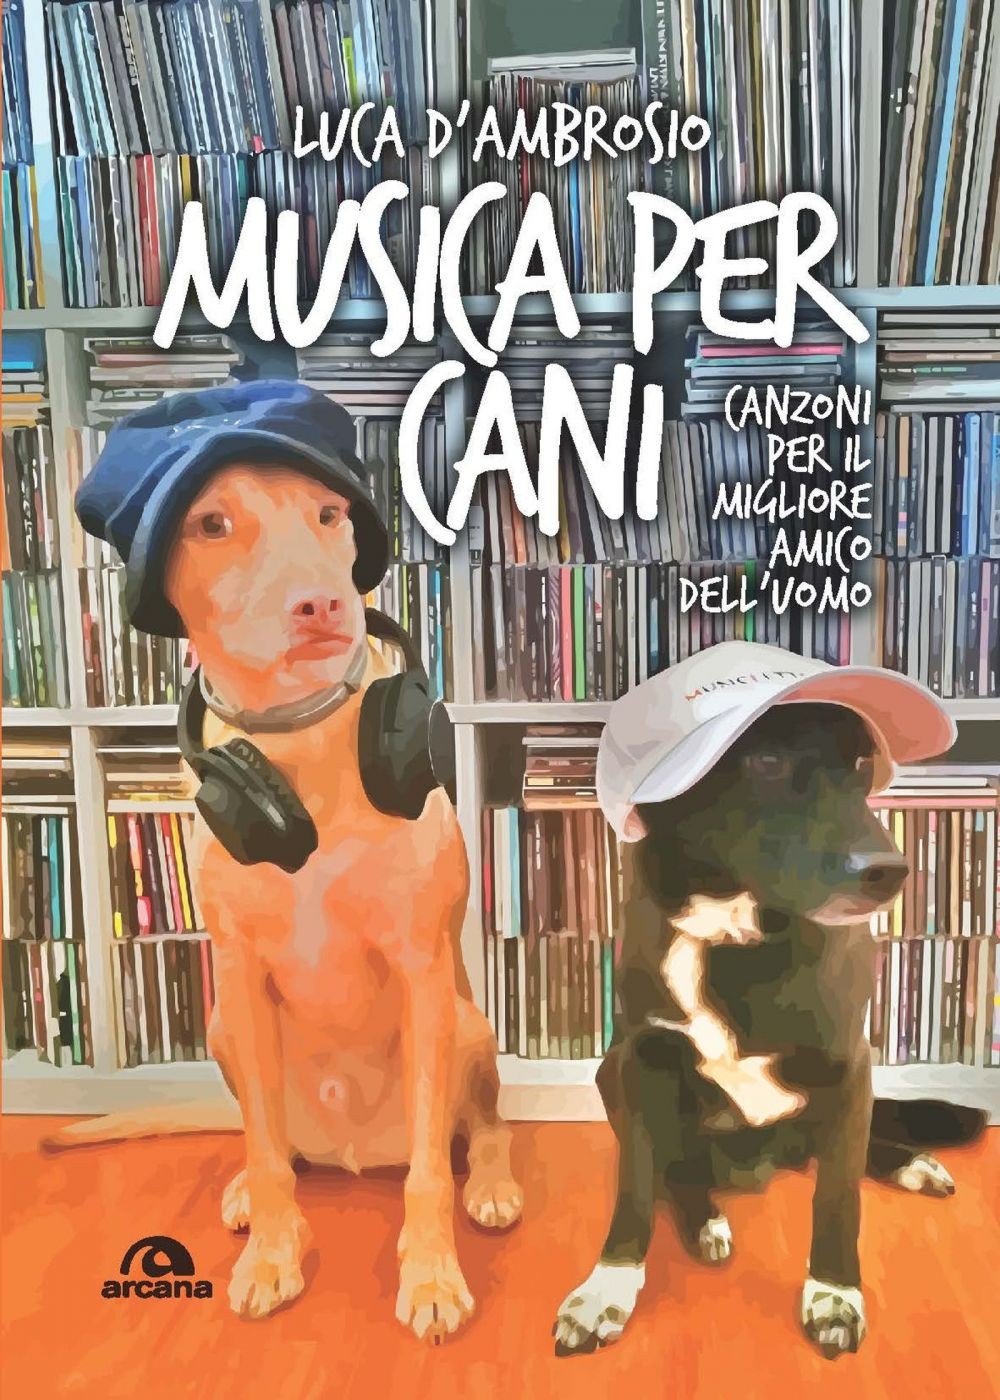 Musica per cani - Librerie.coop